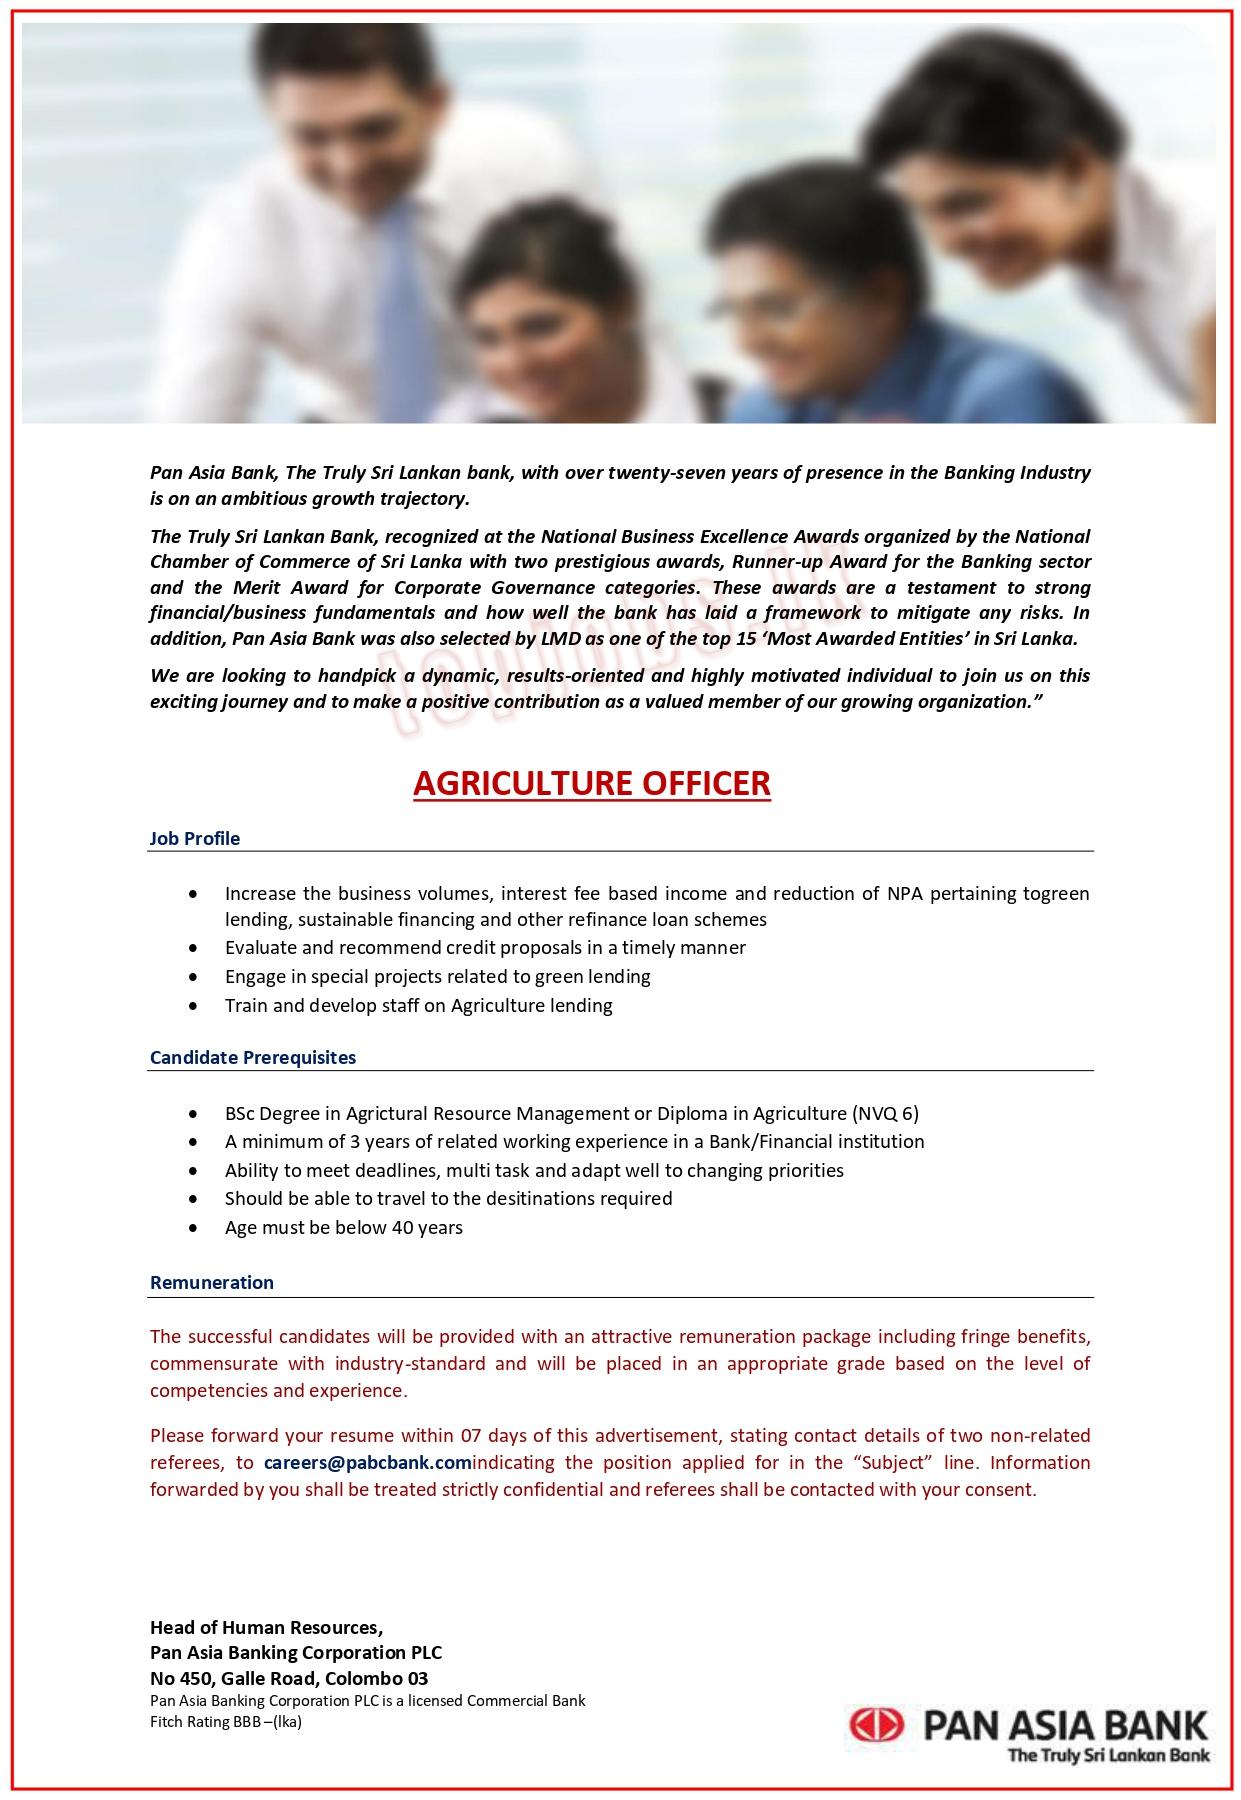 Agriculture Officer Jobs Vacancies - Pan Asia Bank Jobs Vacancies